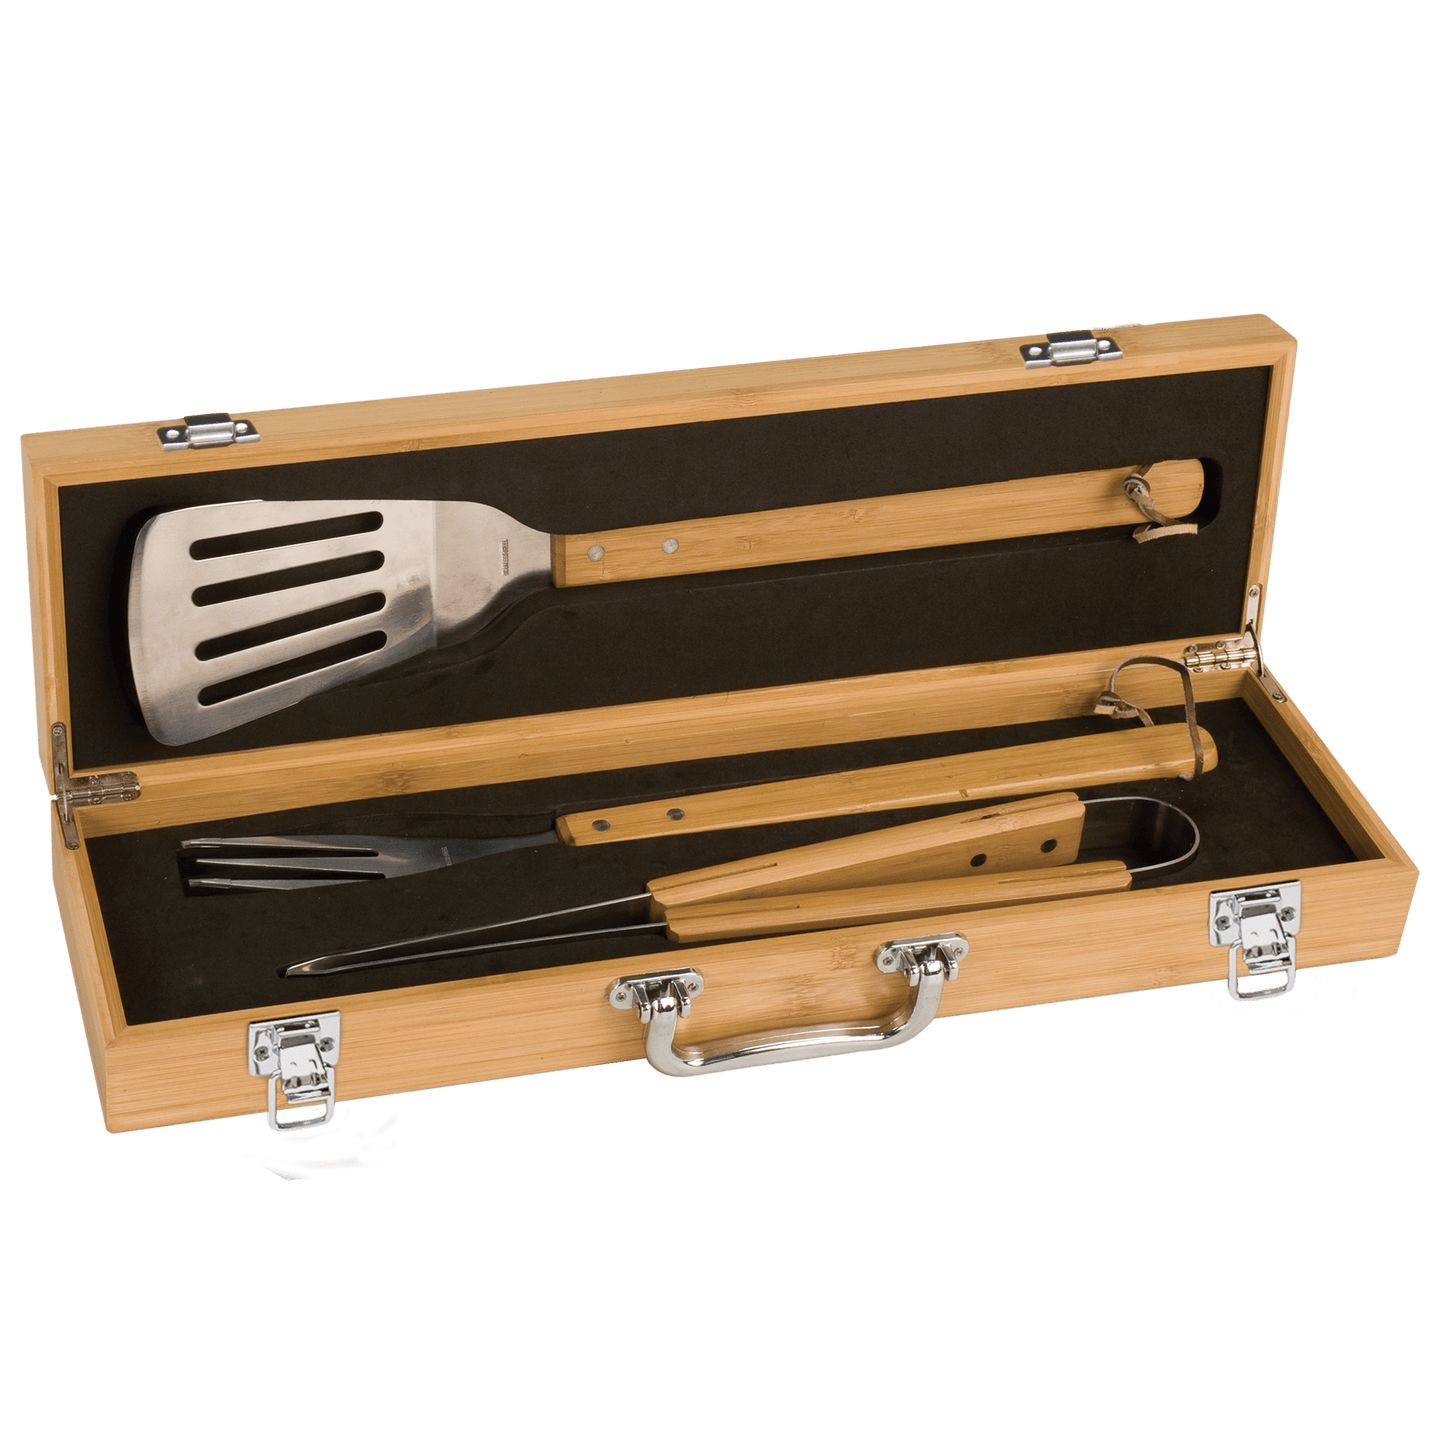 Bamboo BBQ Gift Set, kitchen utensils